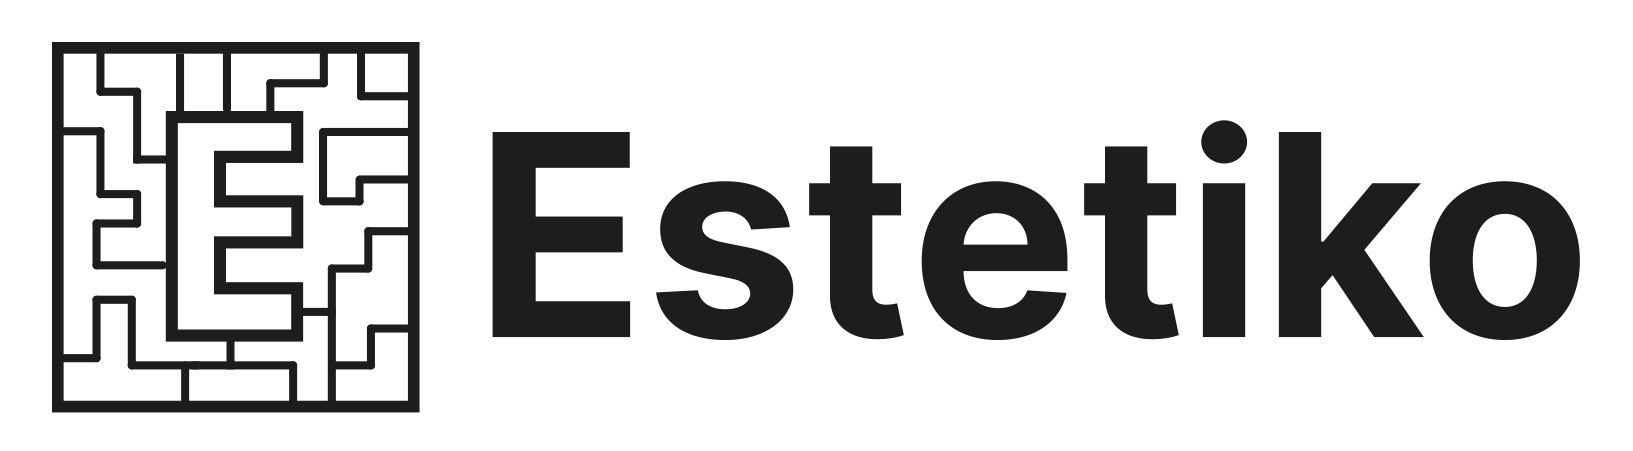 Estetiko Logo